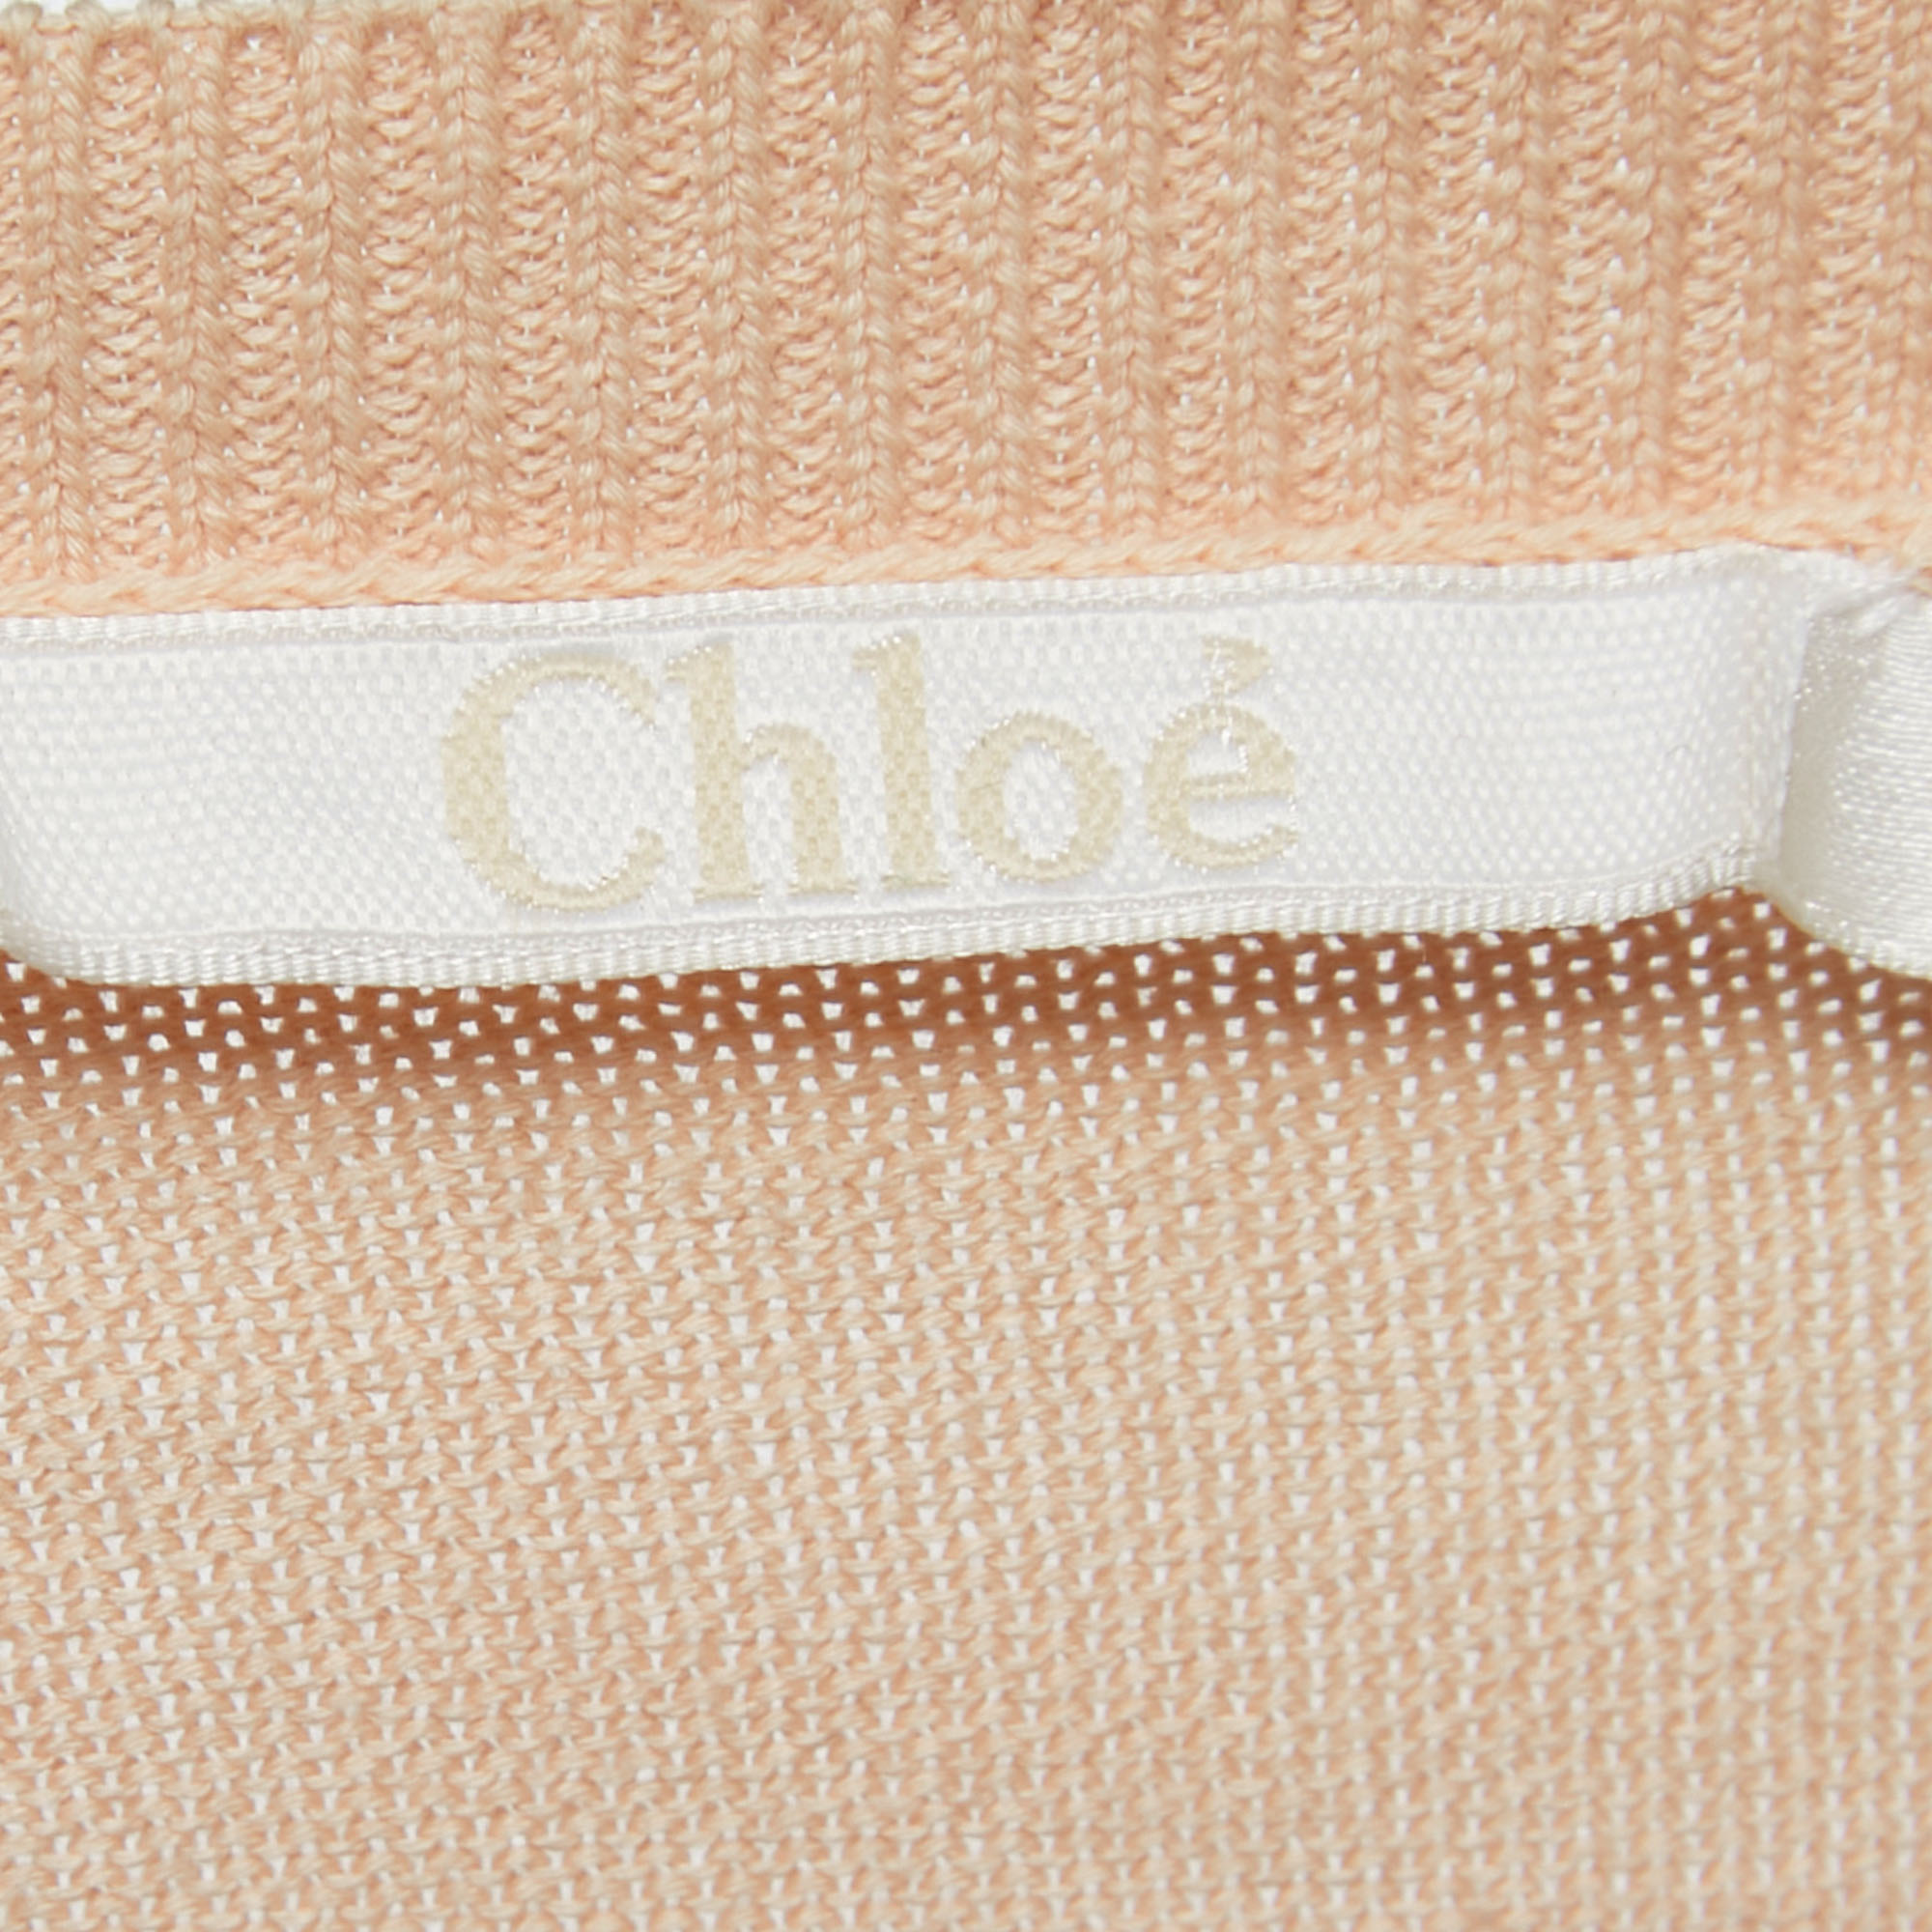 Chloe Beige Cotton Knit Floral Sleeve Detail Top XS